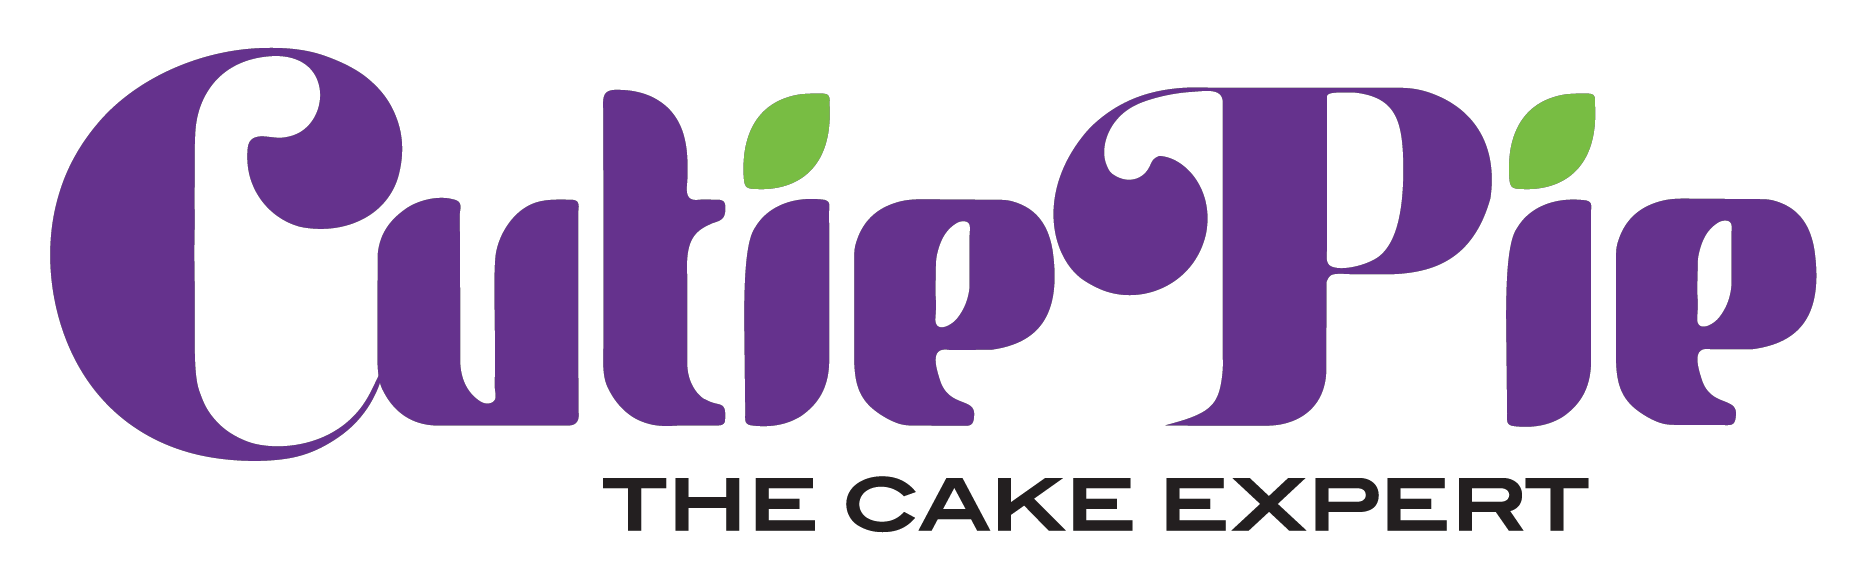 CutiePie, a baking venture in Kerala, conquer heights #FouziNaizam #CutiePie  #Cakes #Channeliam - YouTube